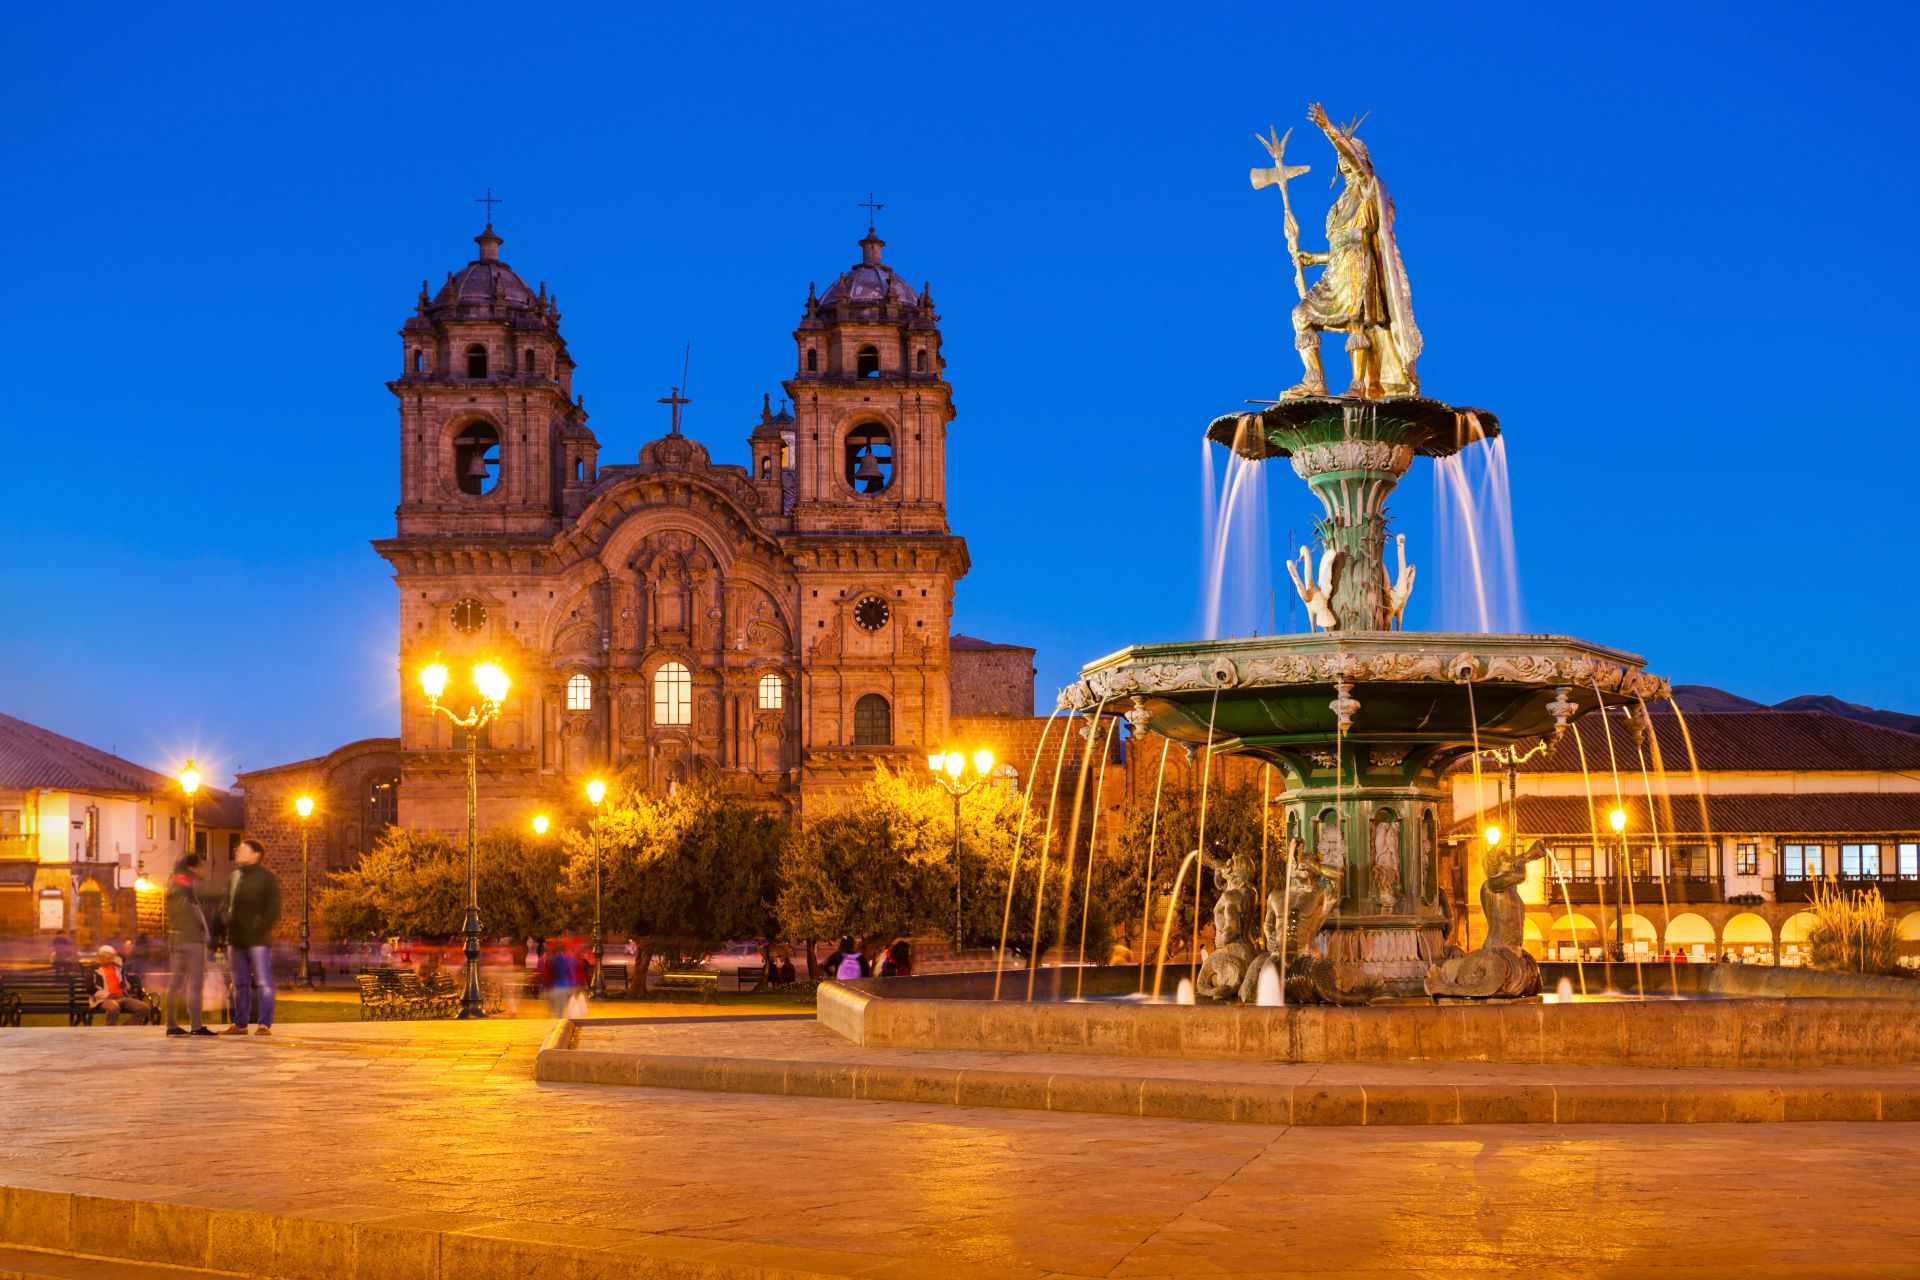 Plaza de Armas is a central square in Cusco